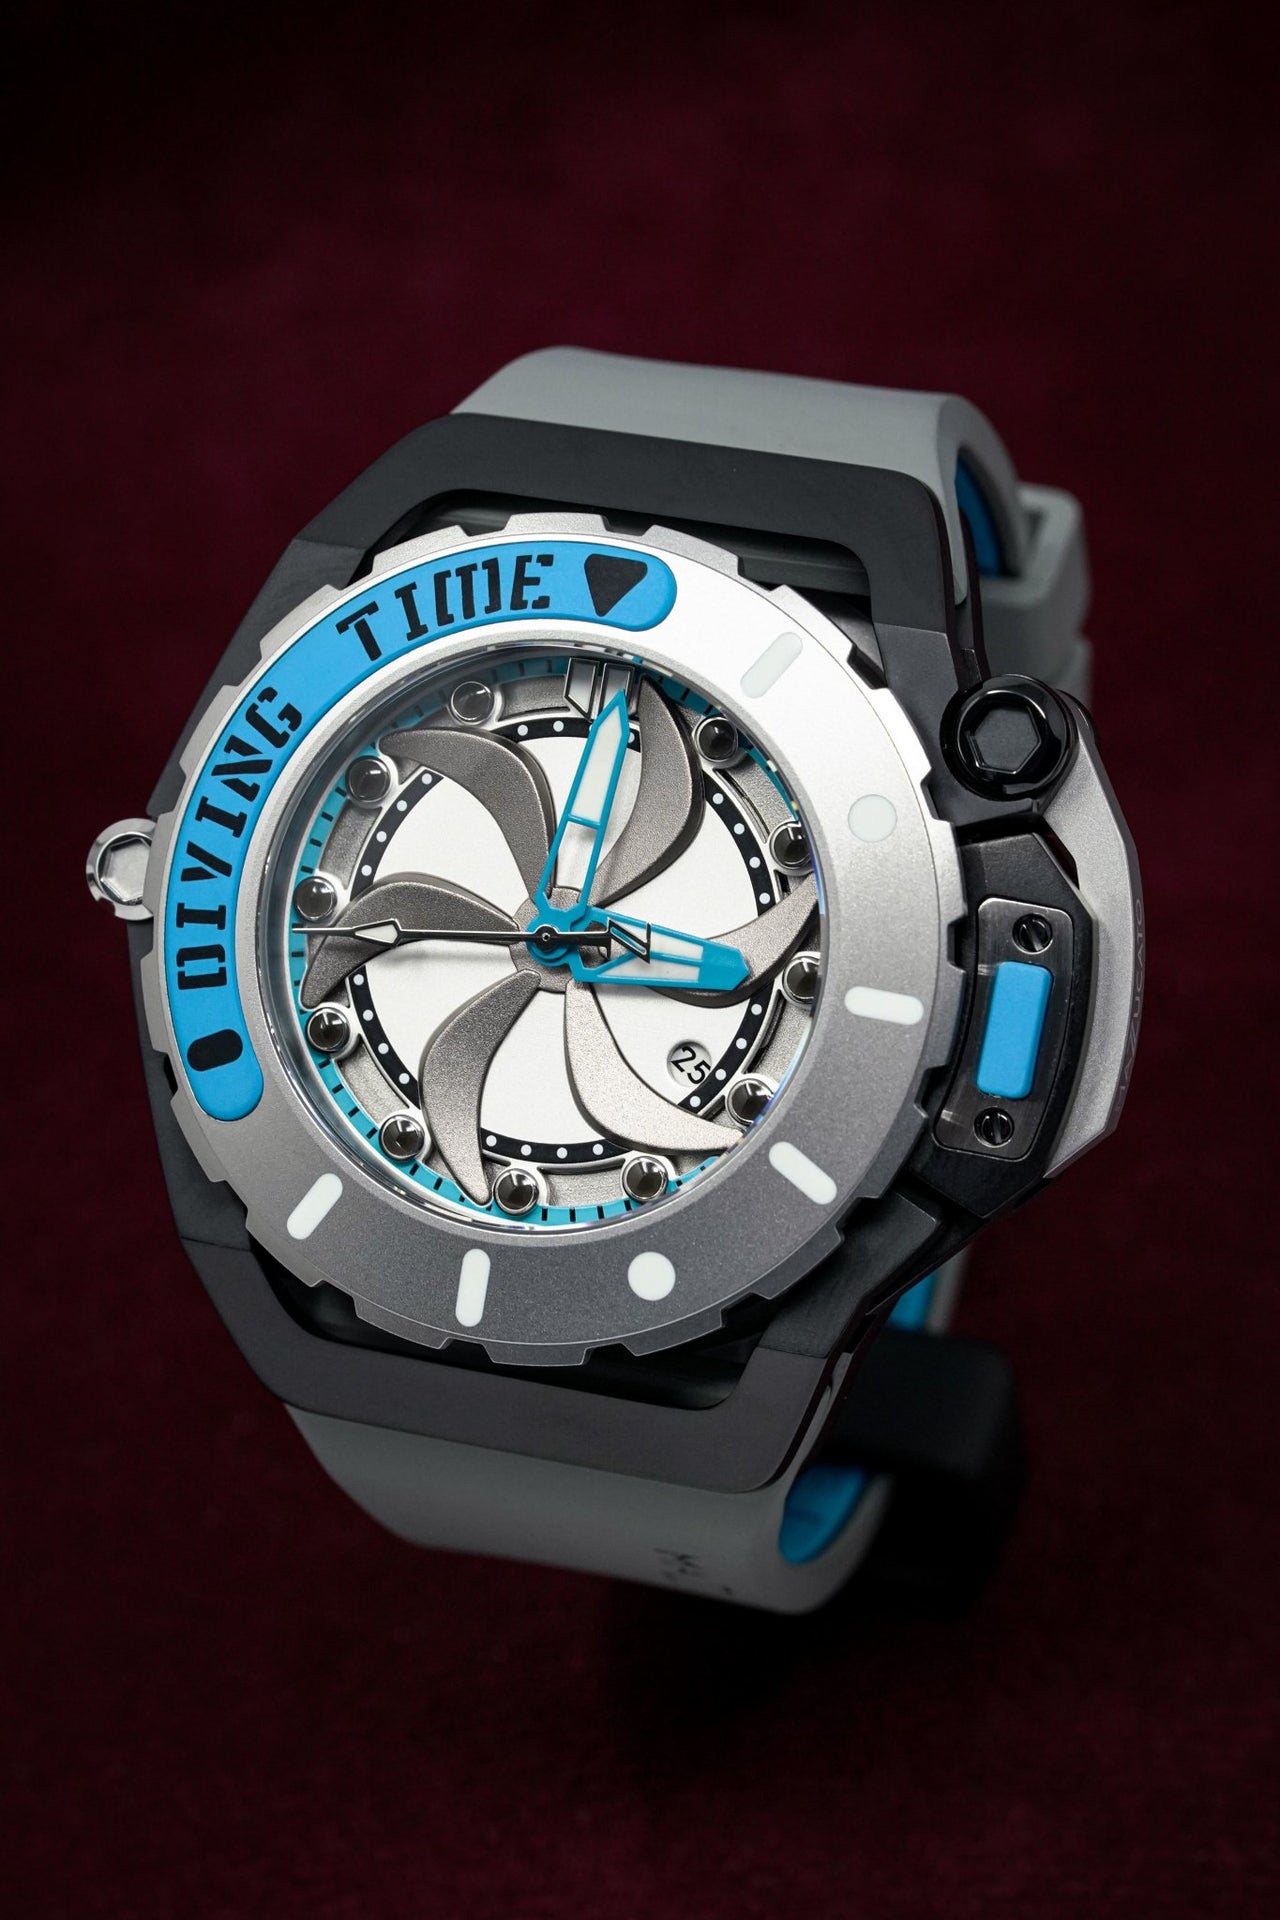 Mazzucato RIM Scuba Blue Grey - Watches & Crystals